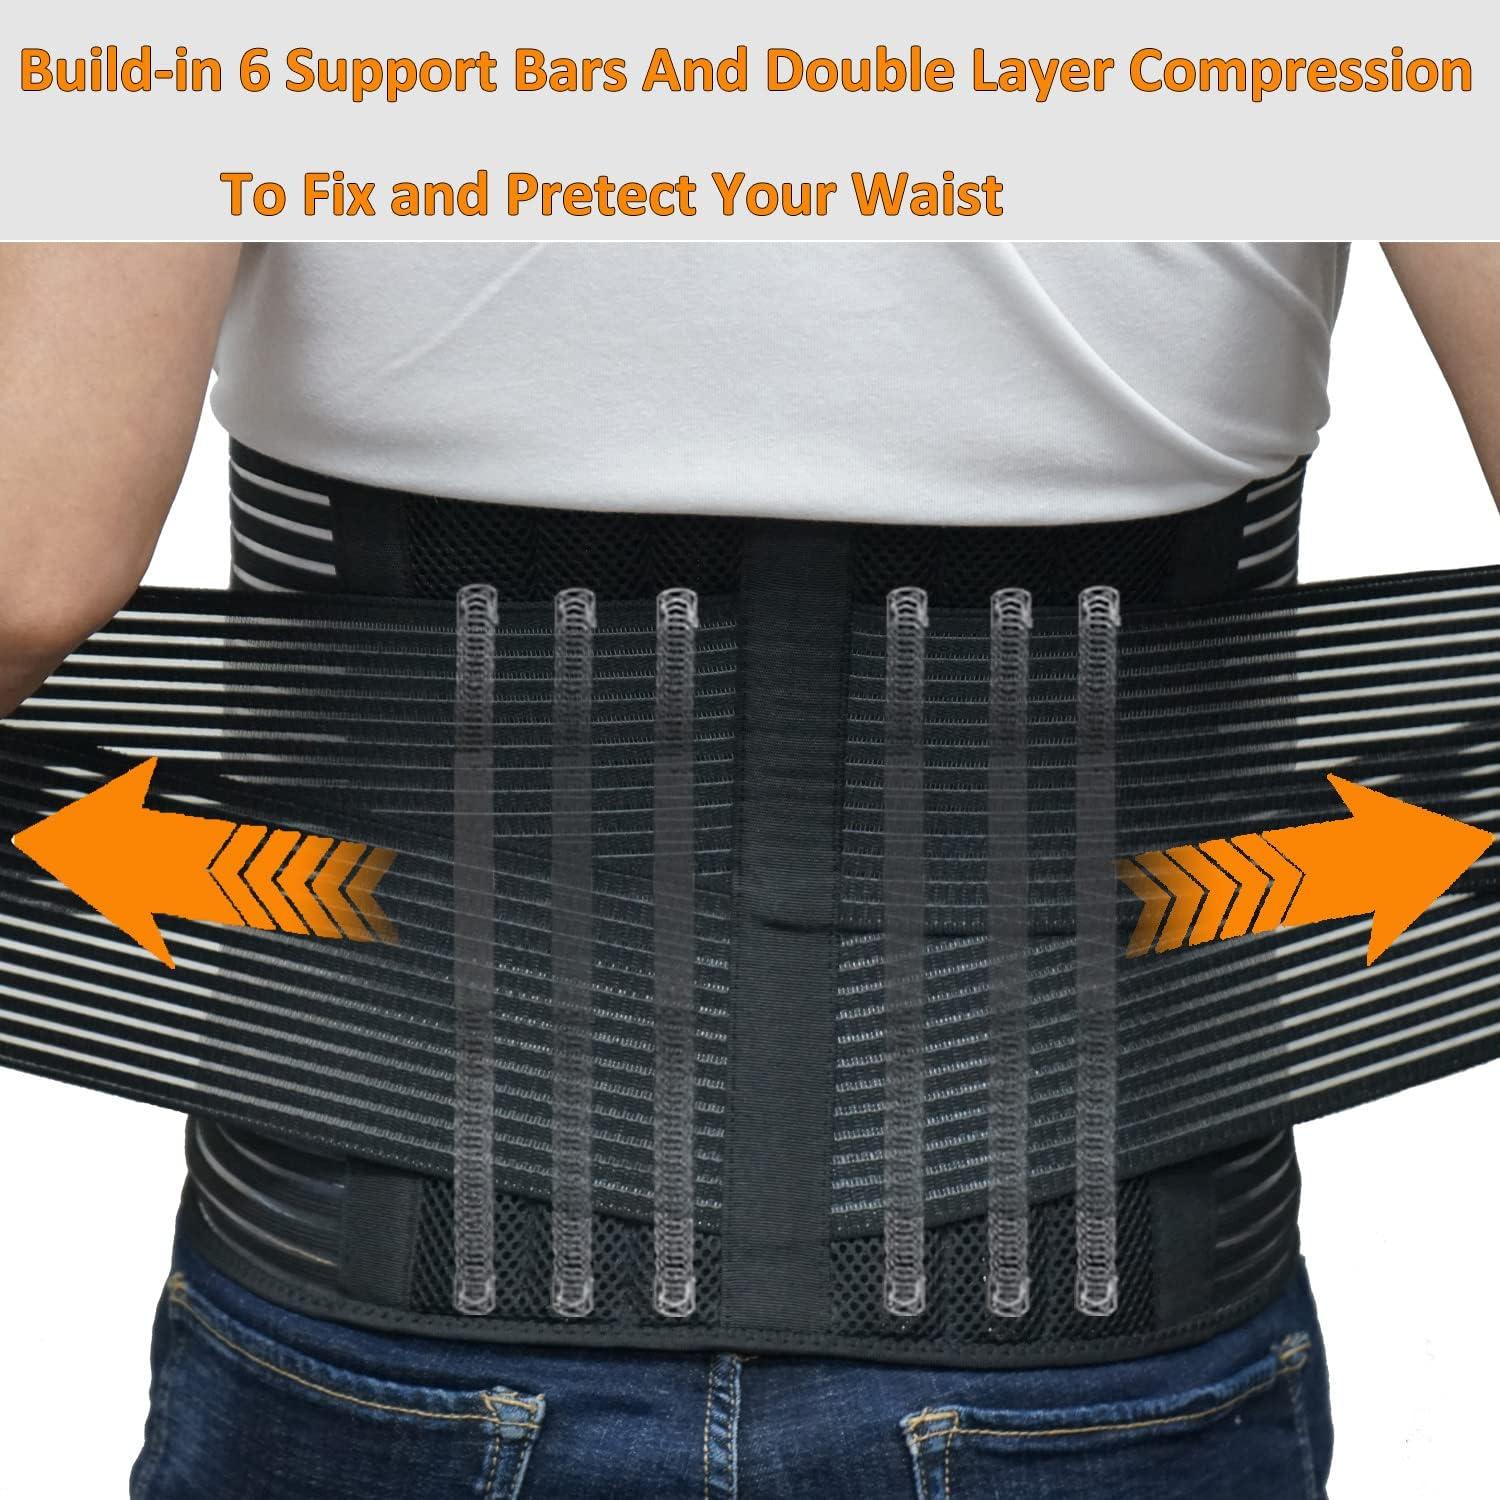 Back Support Belt for Women and Men, Back Brace Relieve Lower Back Pain,  Lower Back Brace with 8 Reinforce Bones,Tummy Control Black-M